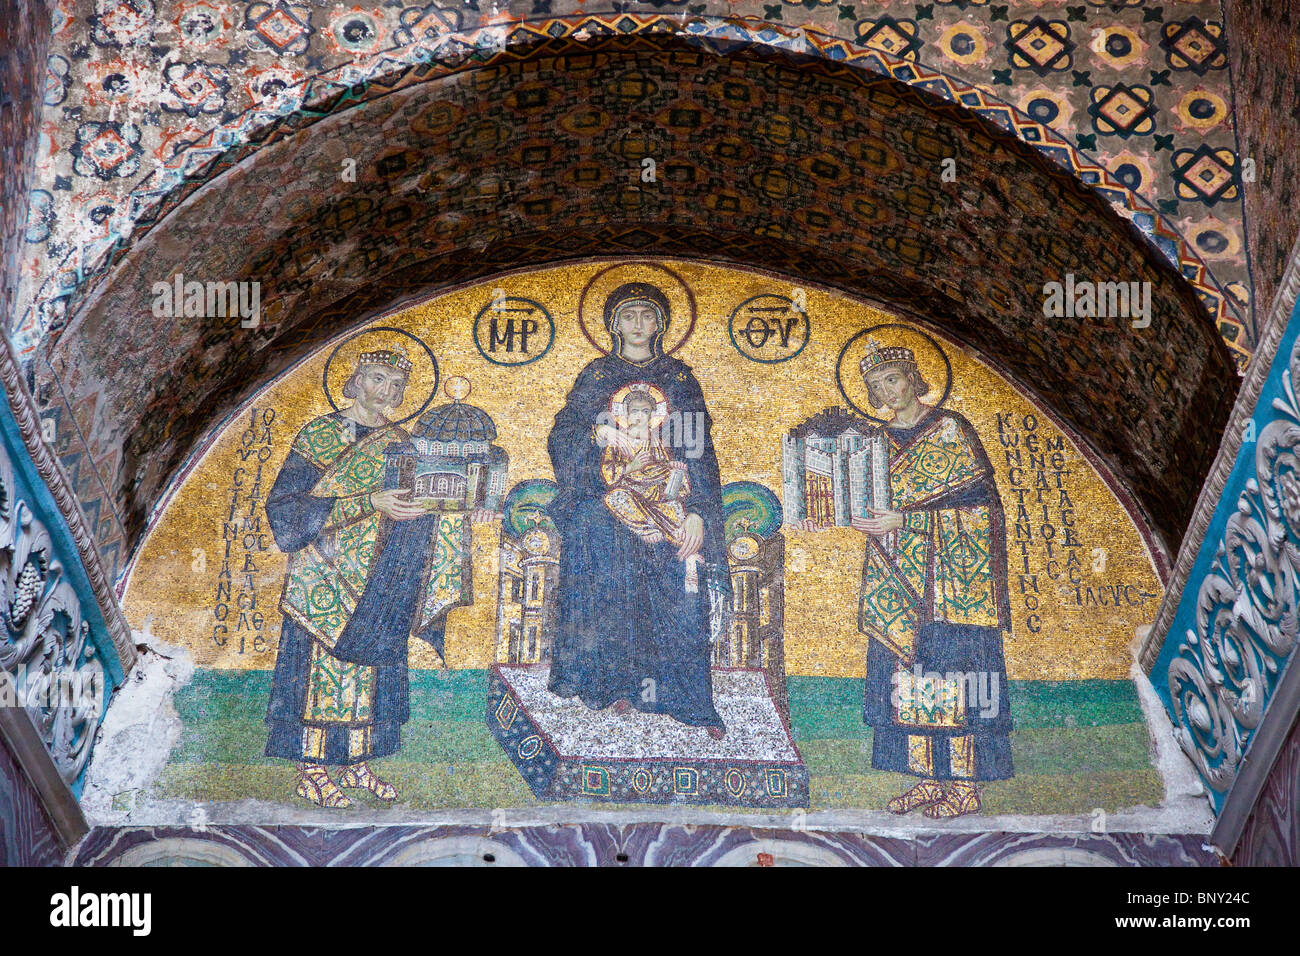 Tile mosaic inside the Hagia Sofia in Istanbul, Turkey Stock Photo